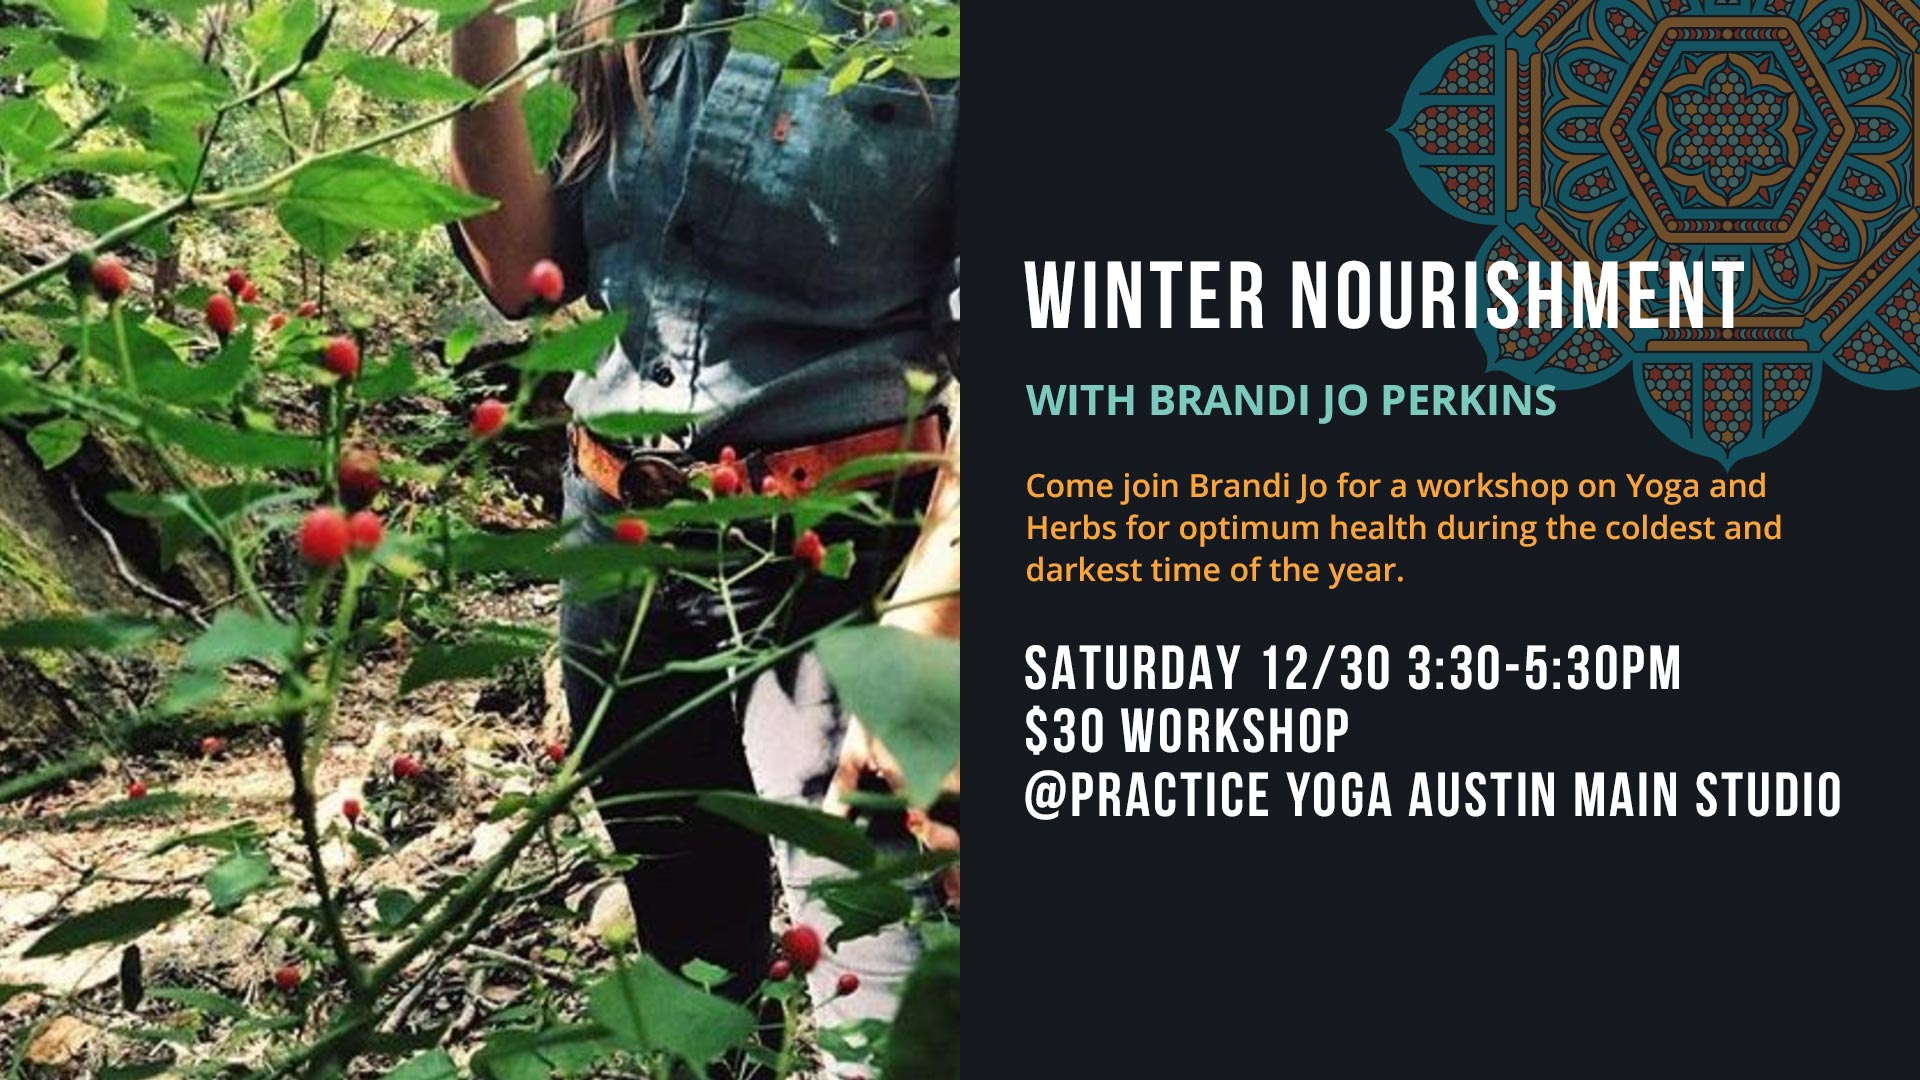 Winter Nourishment with Brandi Jo at Practice Yoga Austin